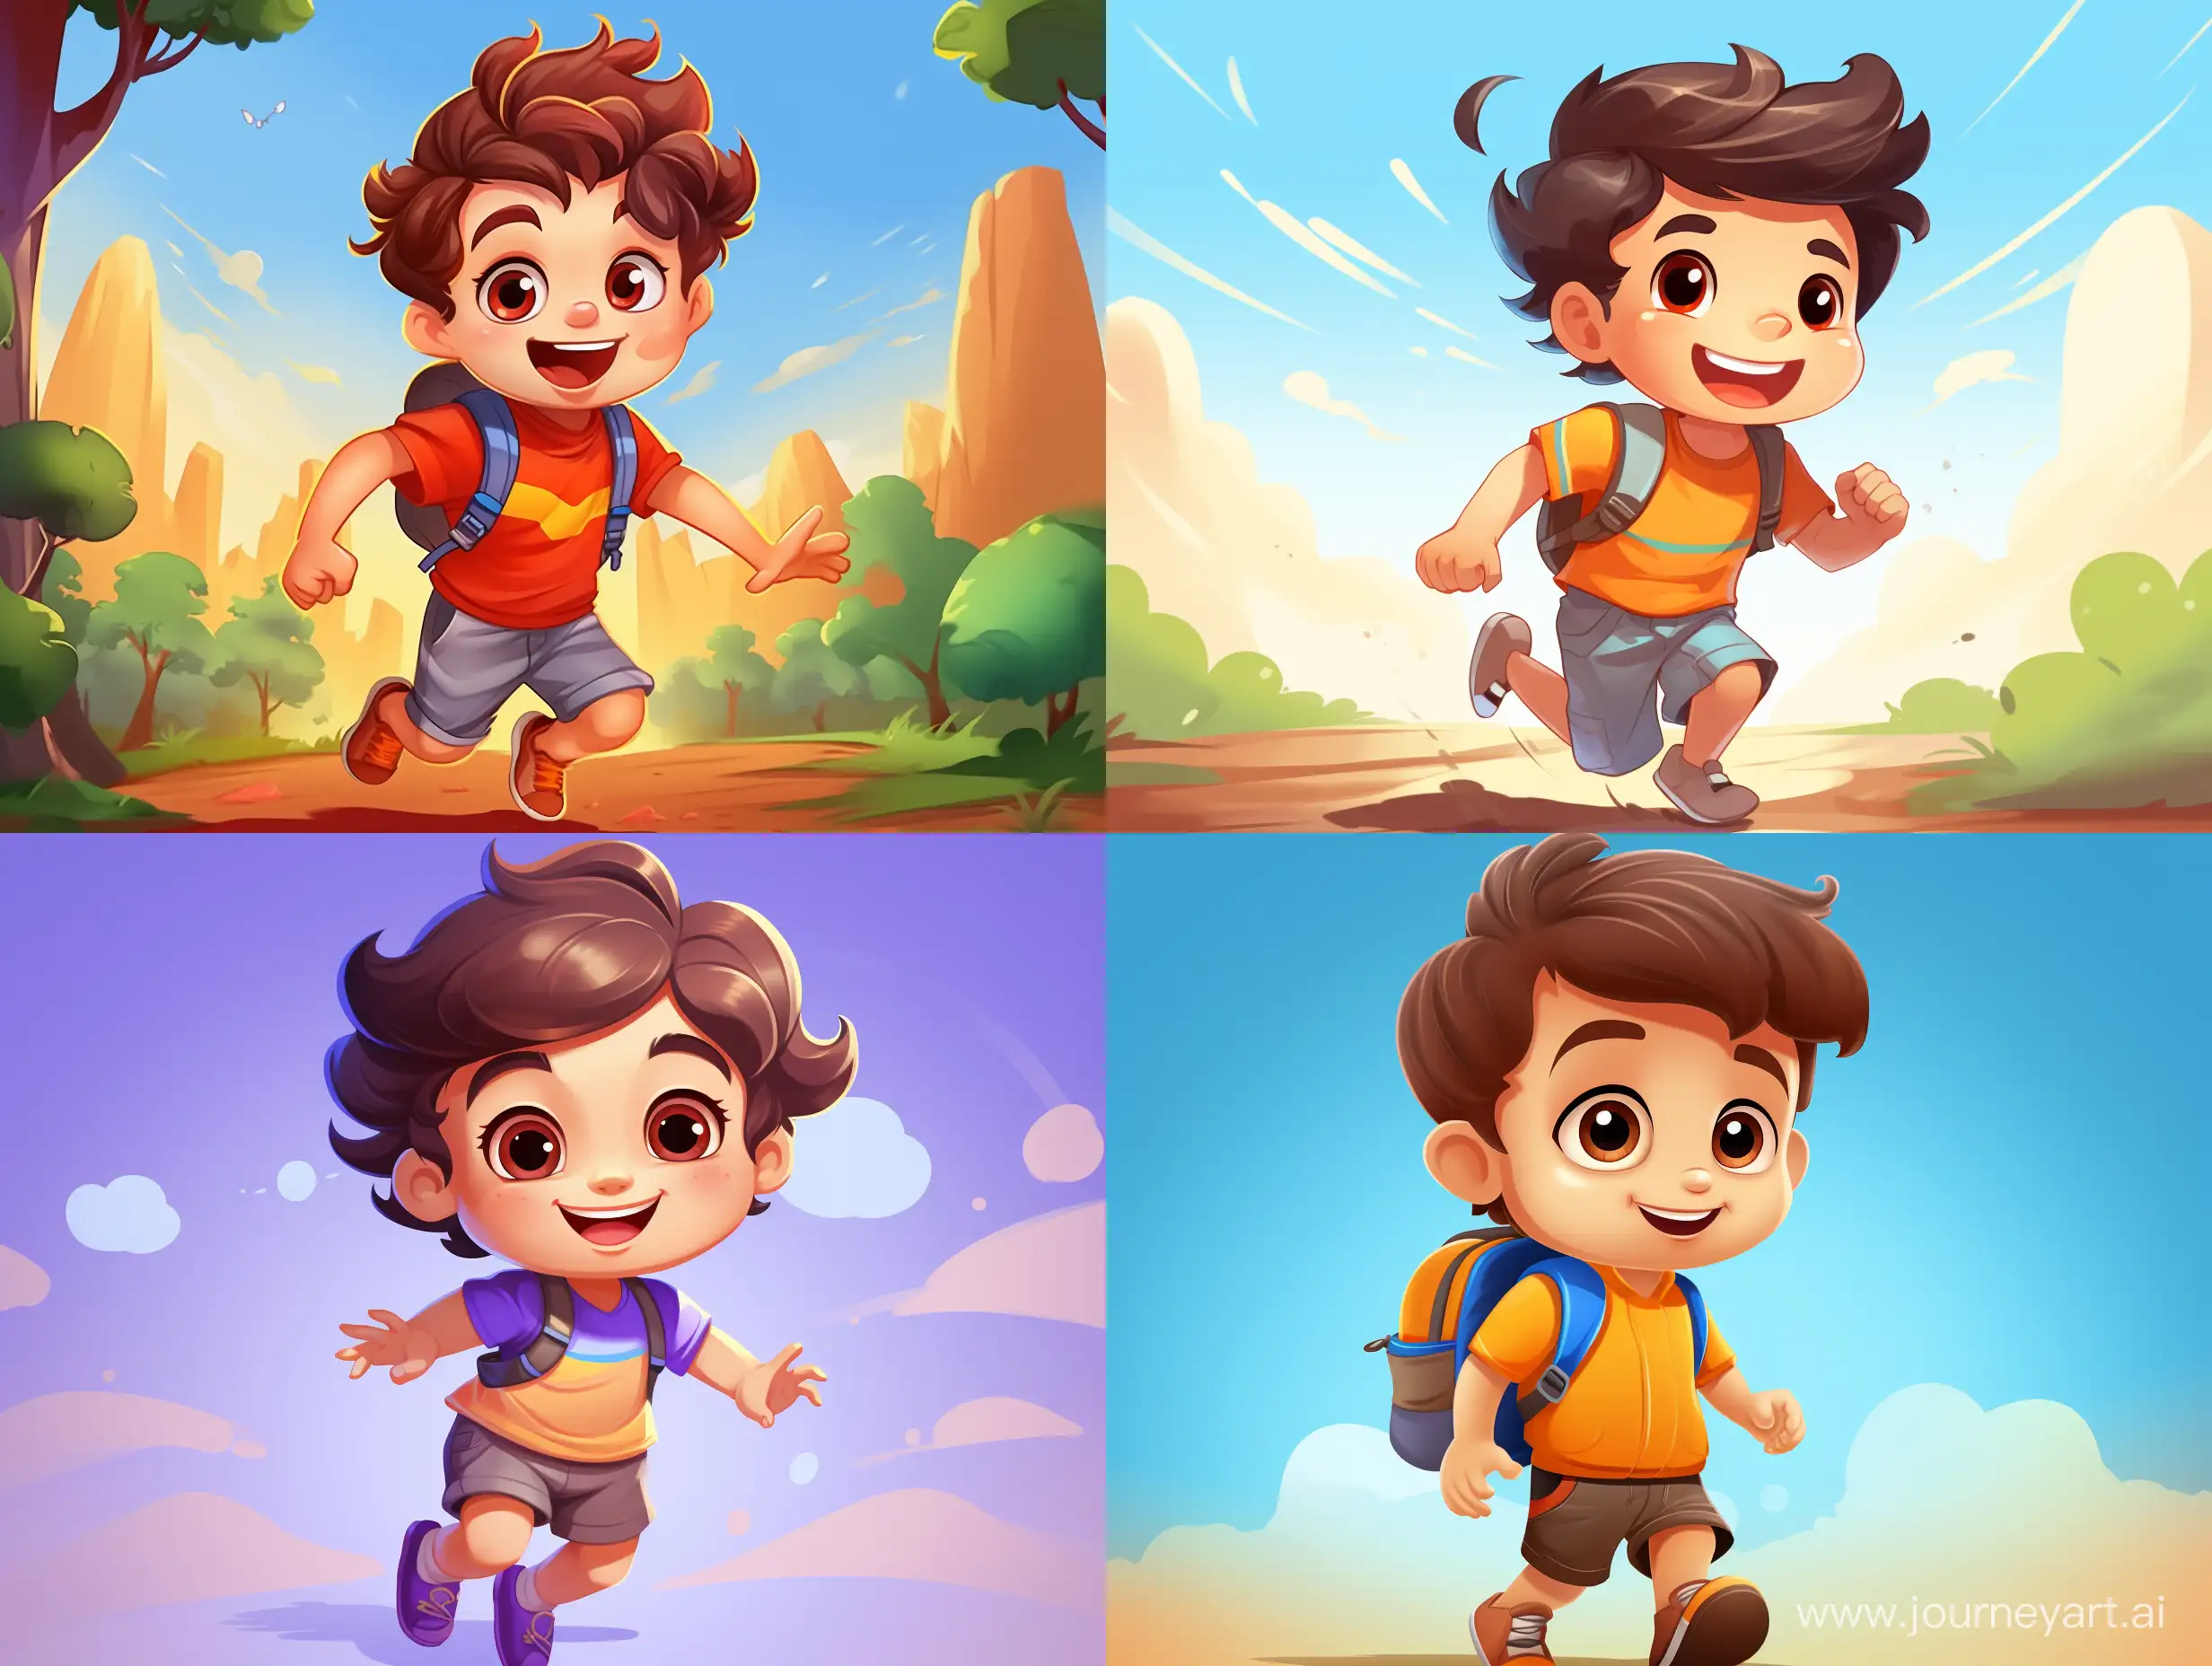 Cute little boy, Cartoon 2D style, lively action, bright colors, --ar 4:3